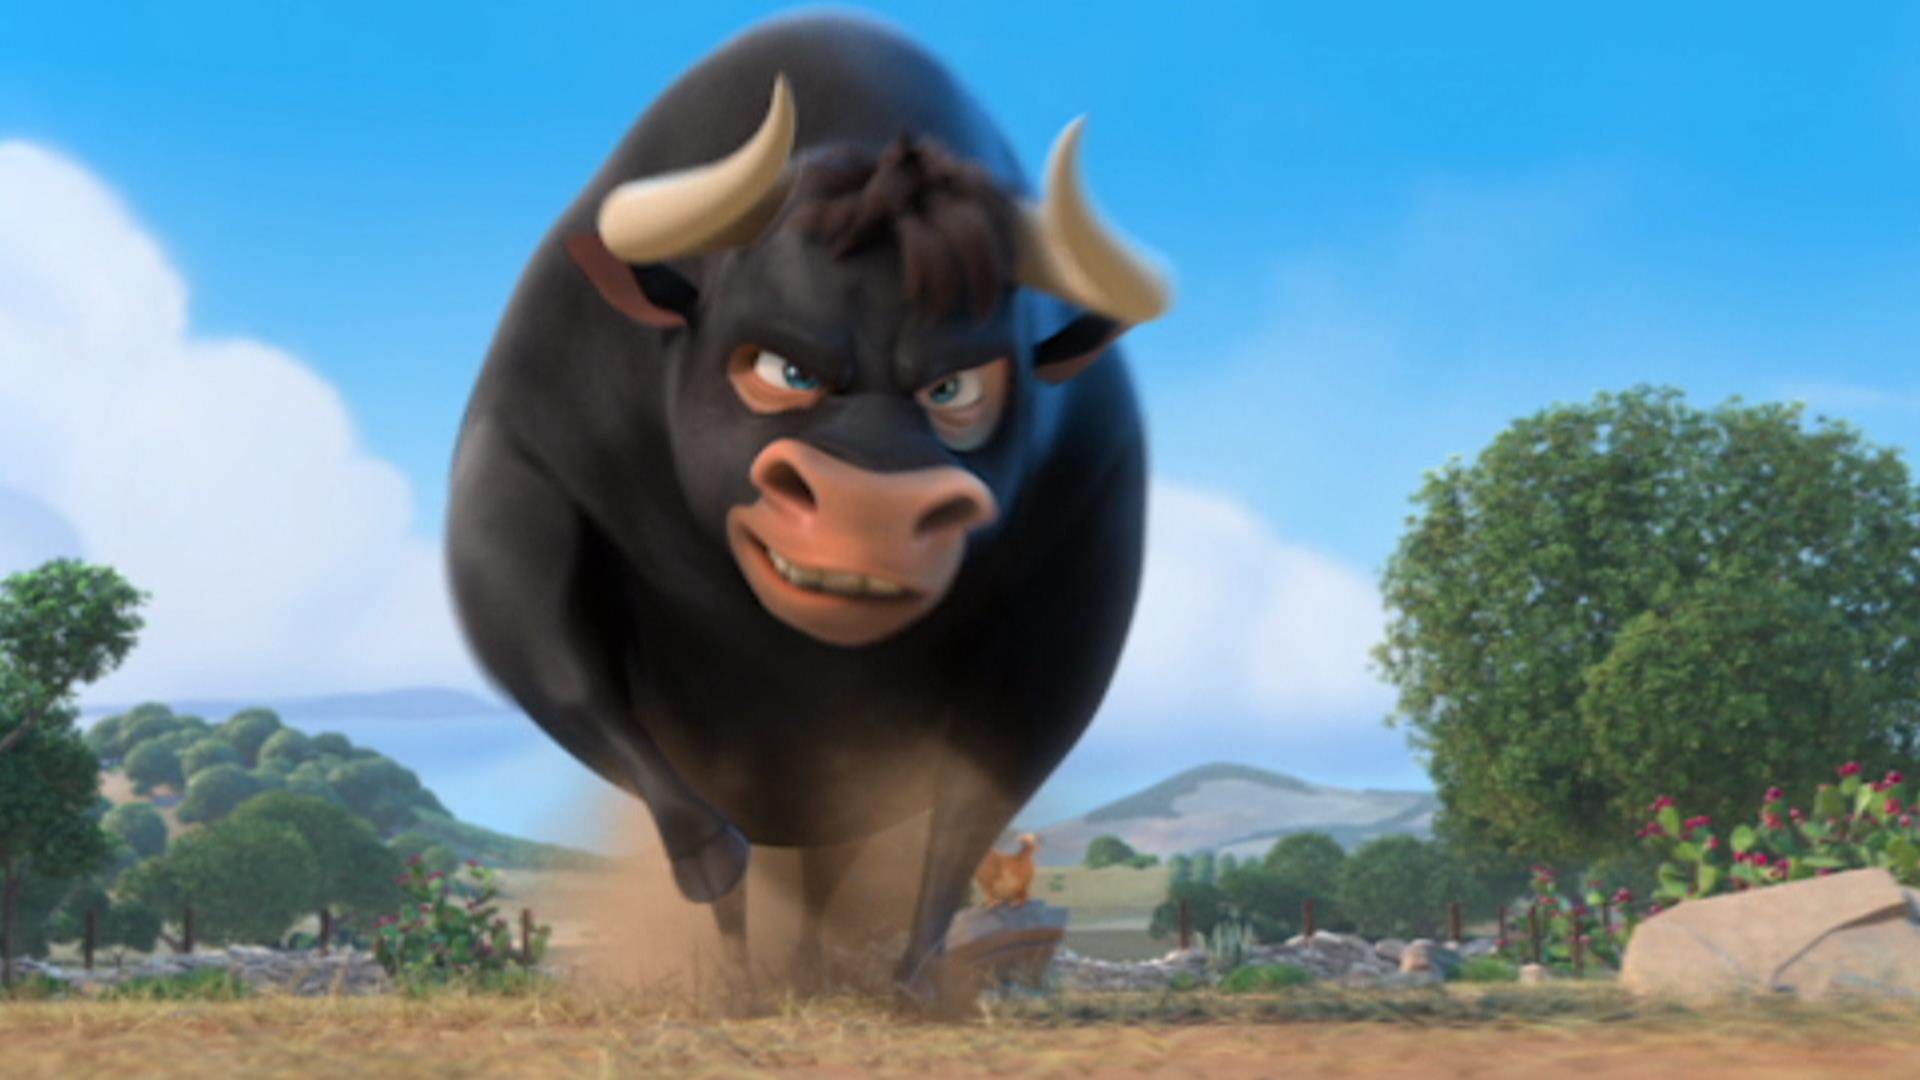 John Cena shares a sneak peek at upcoming animated family film 'Ferdinand'